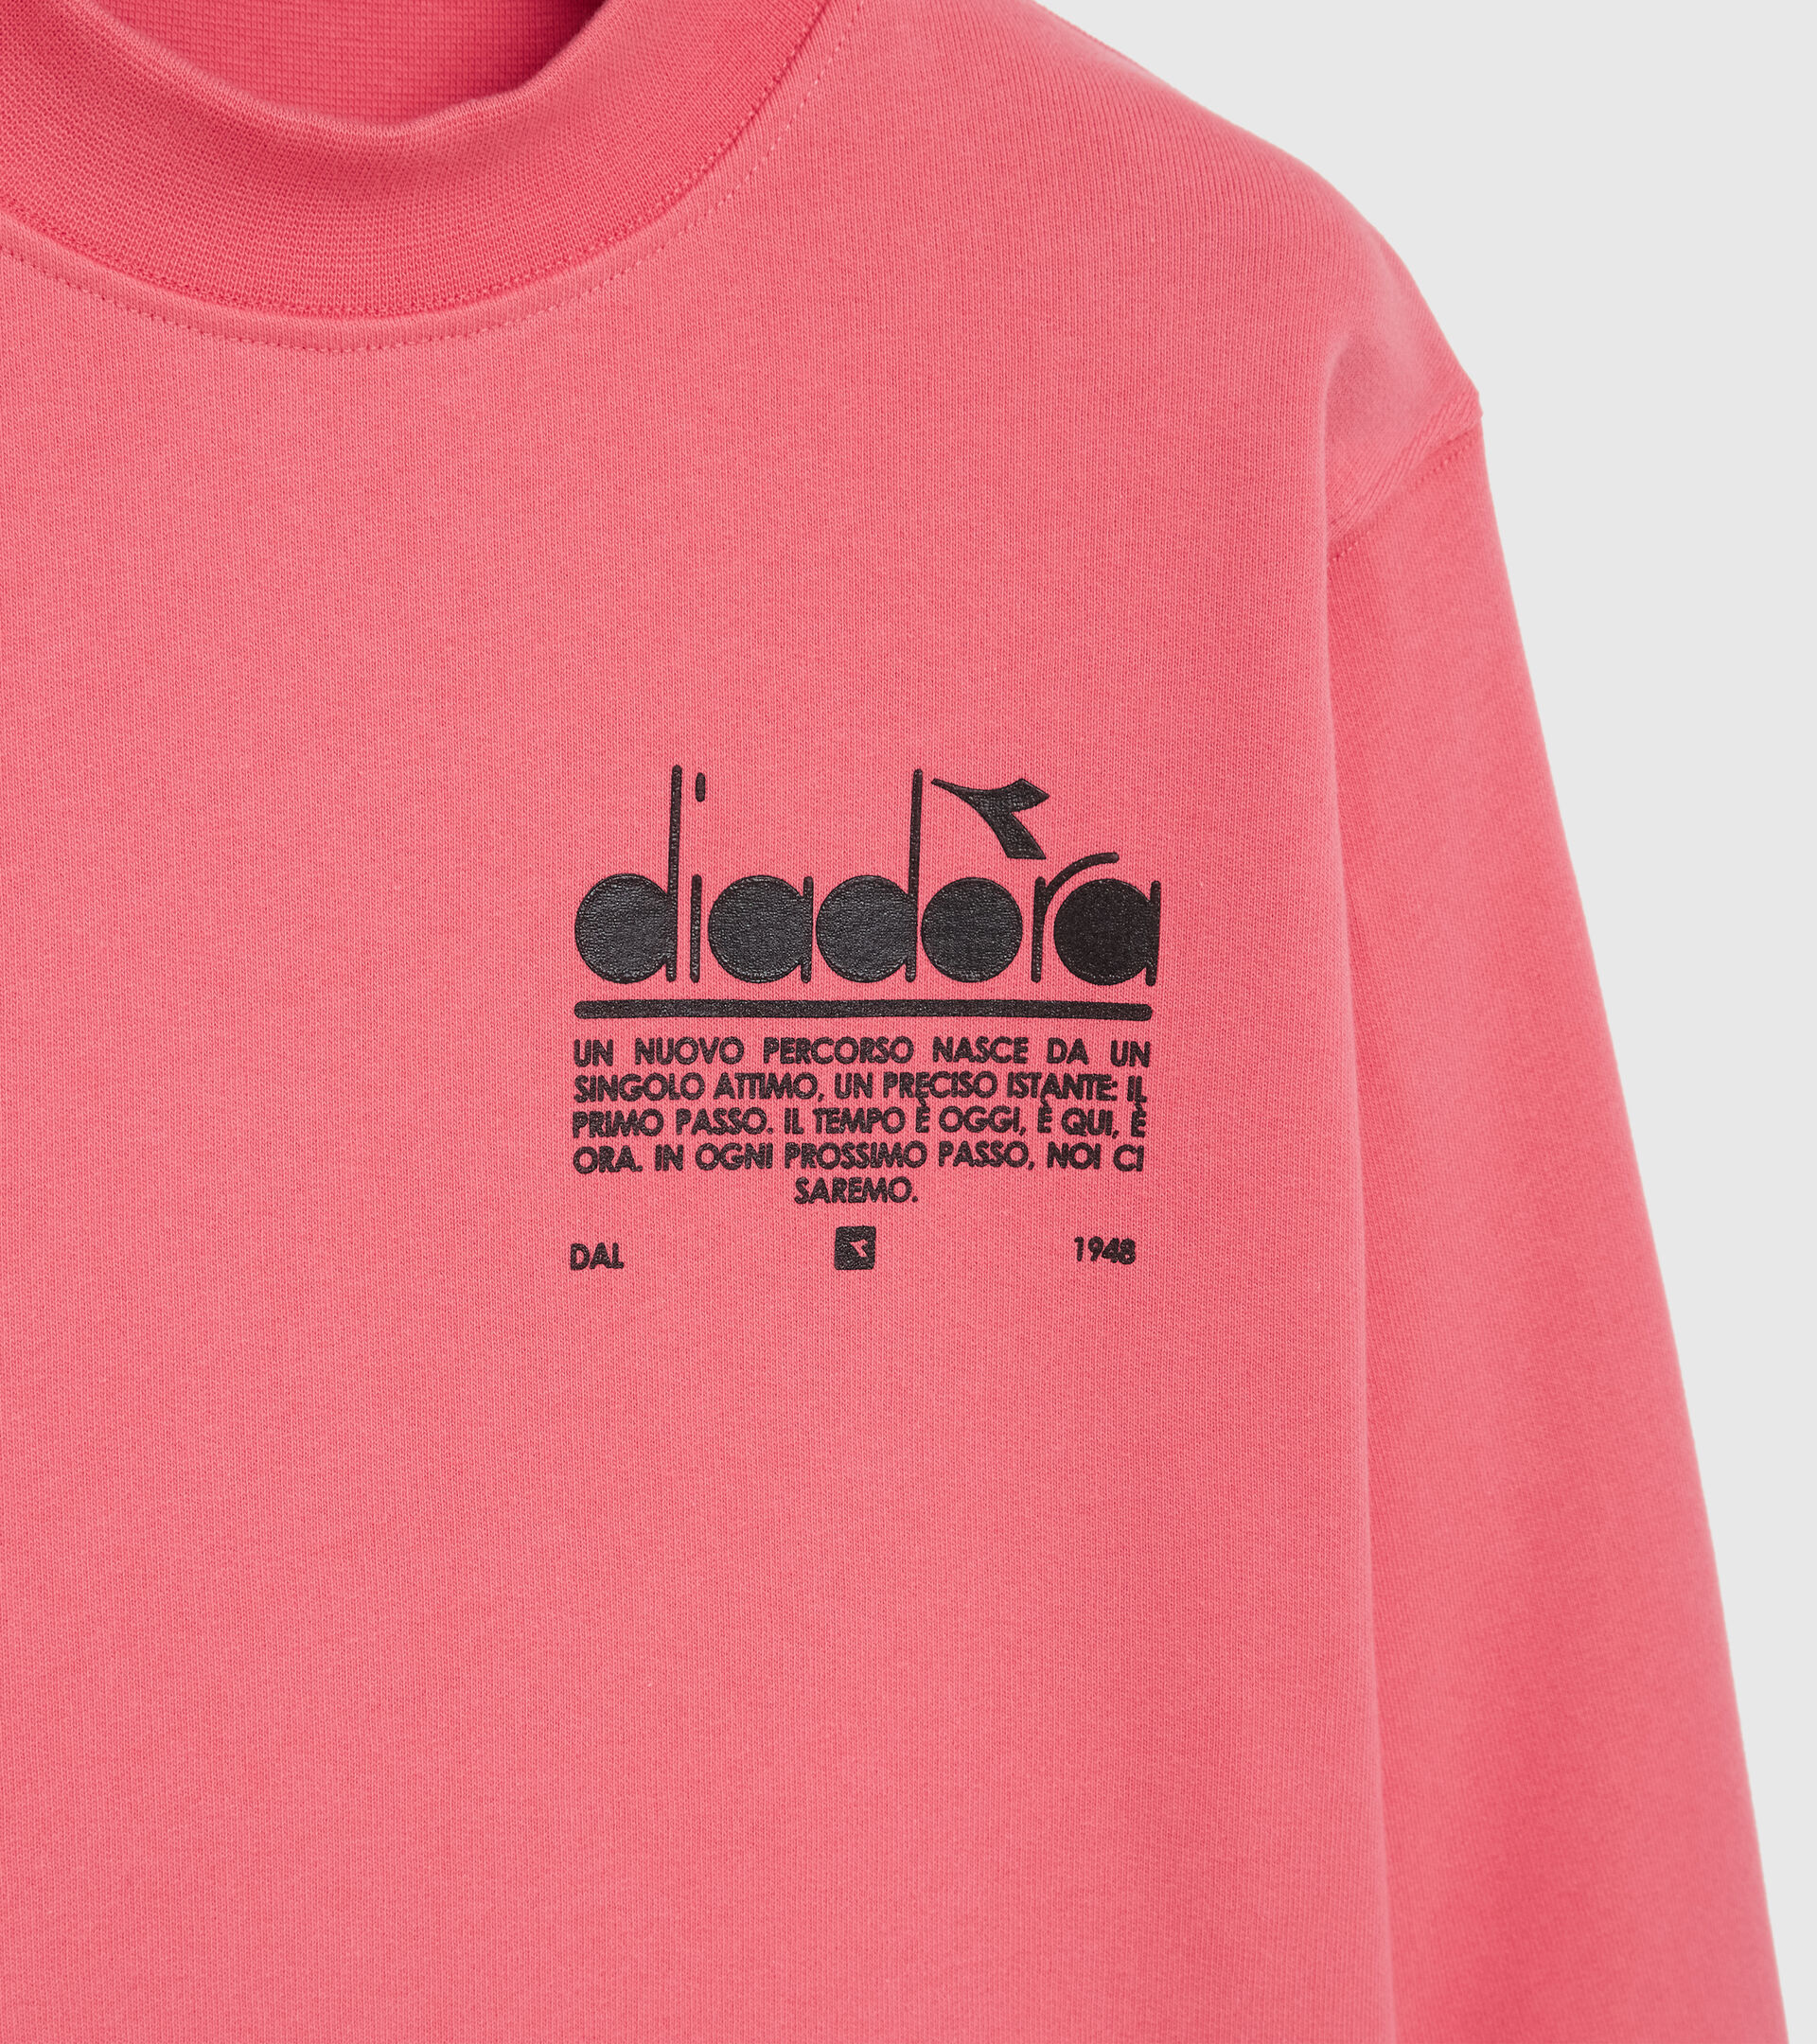 Cotton sweatshirt - Women’s L. SWEATSHIRT CREW MANIFESTO TEA ROSE - Diadora